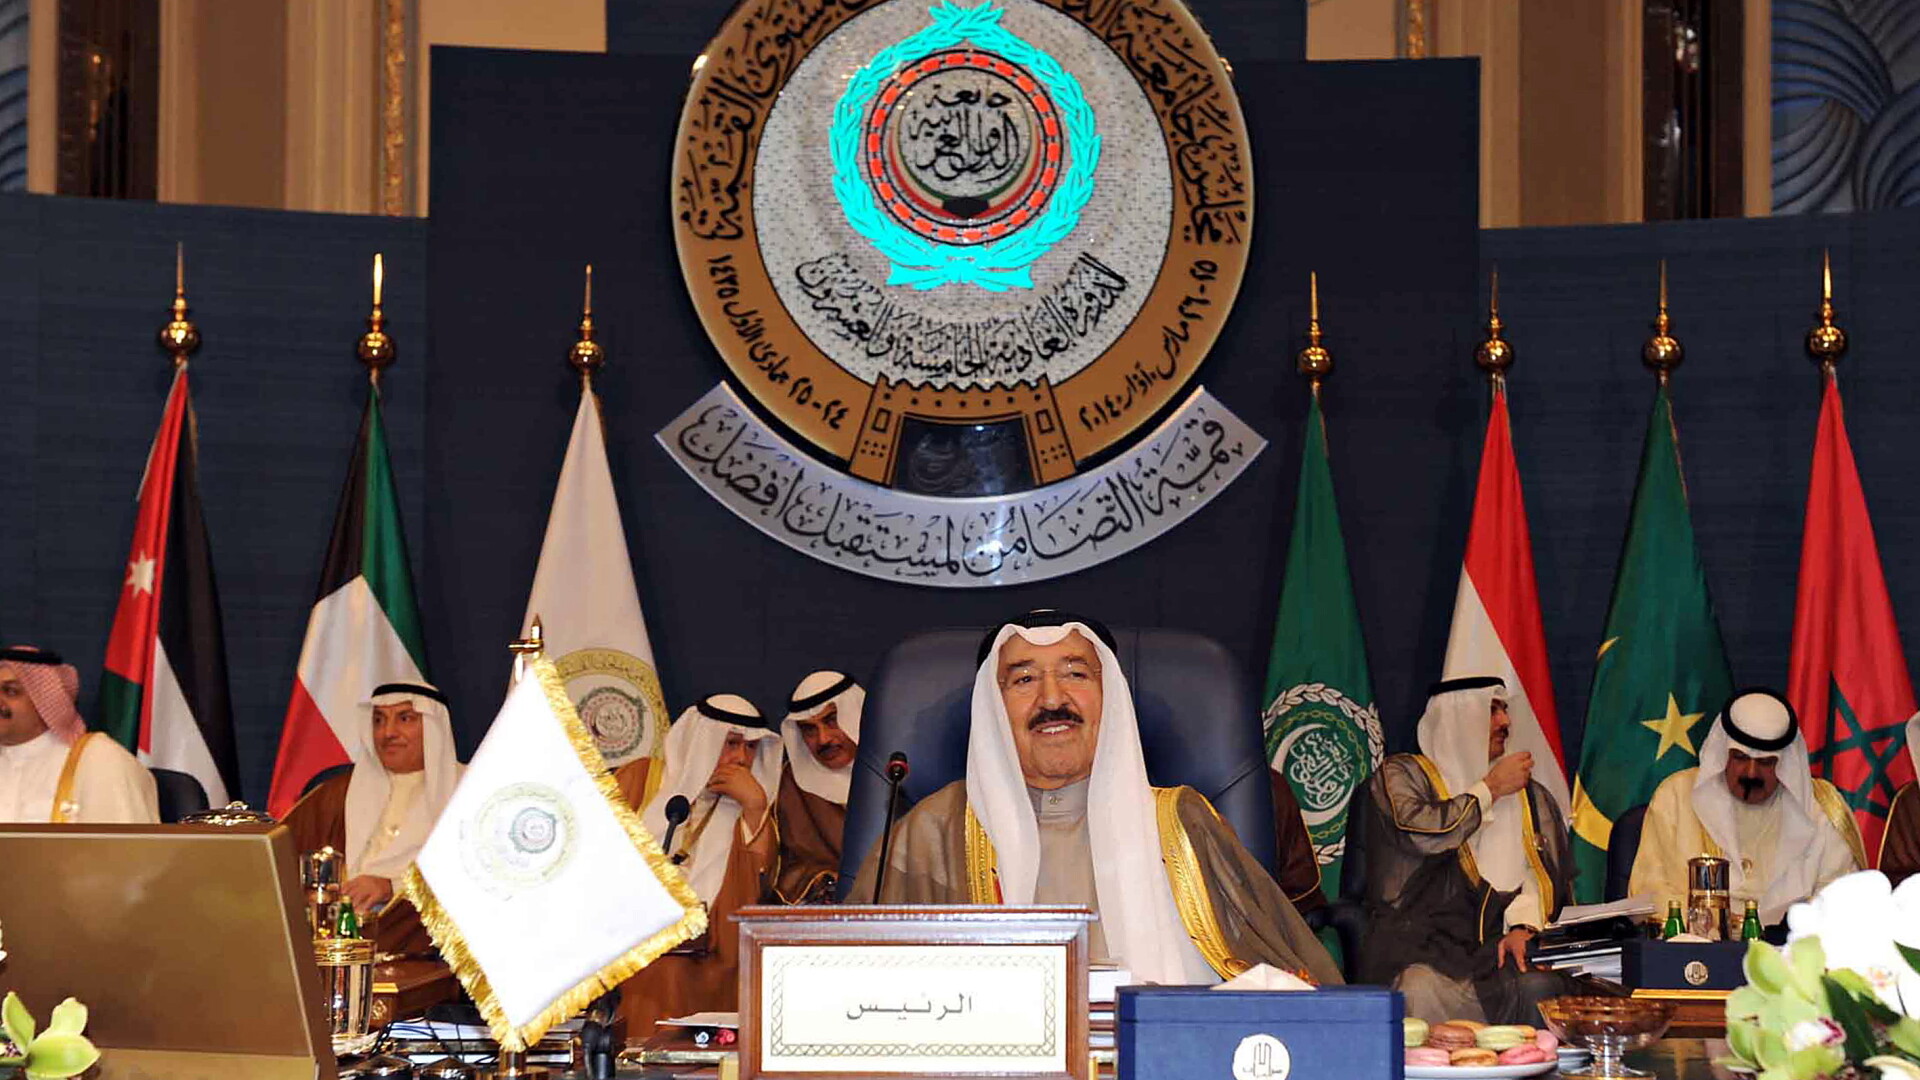 Liga Tarilor Arabe - GETTY